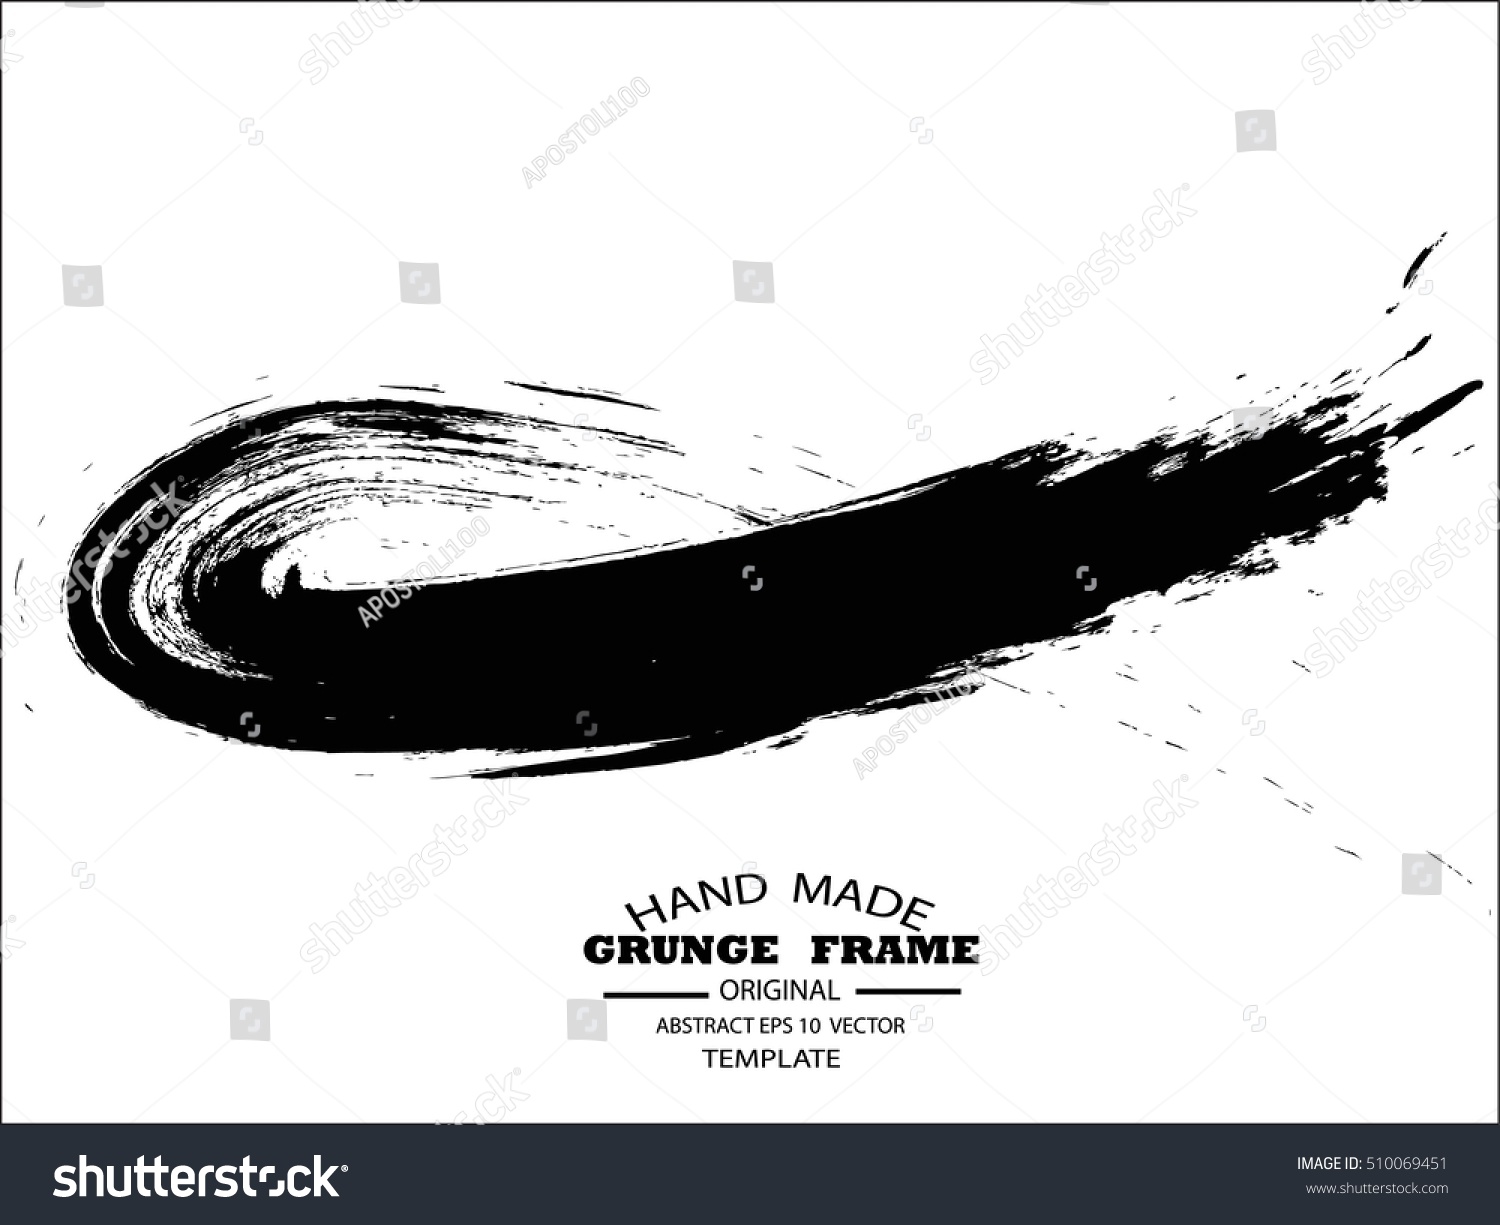 Vector Grunge Paint Brush Curved Brush Stock Vector 510069451 ...